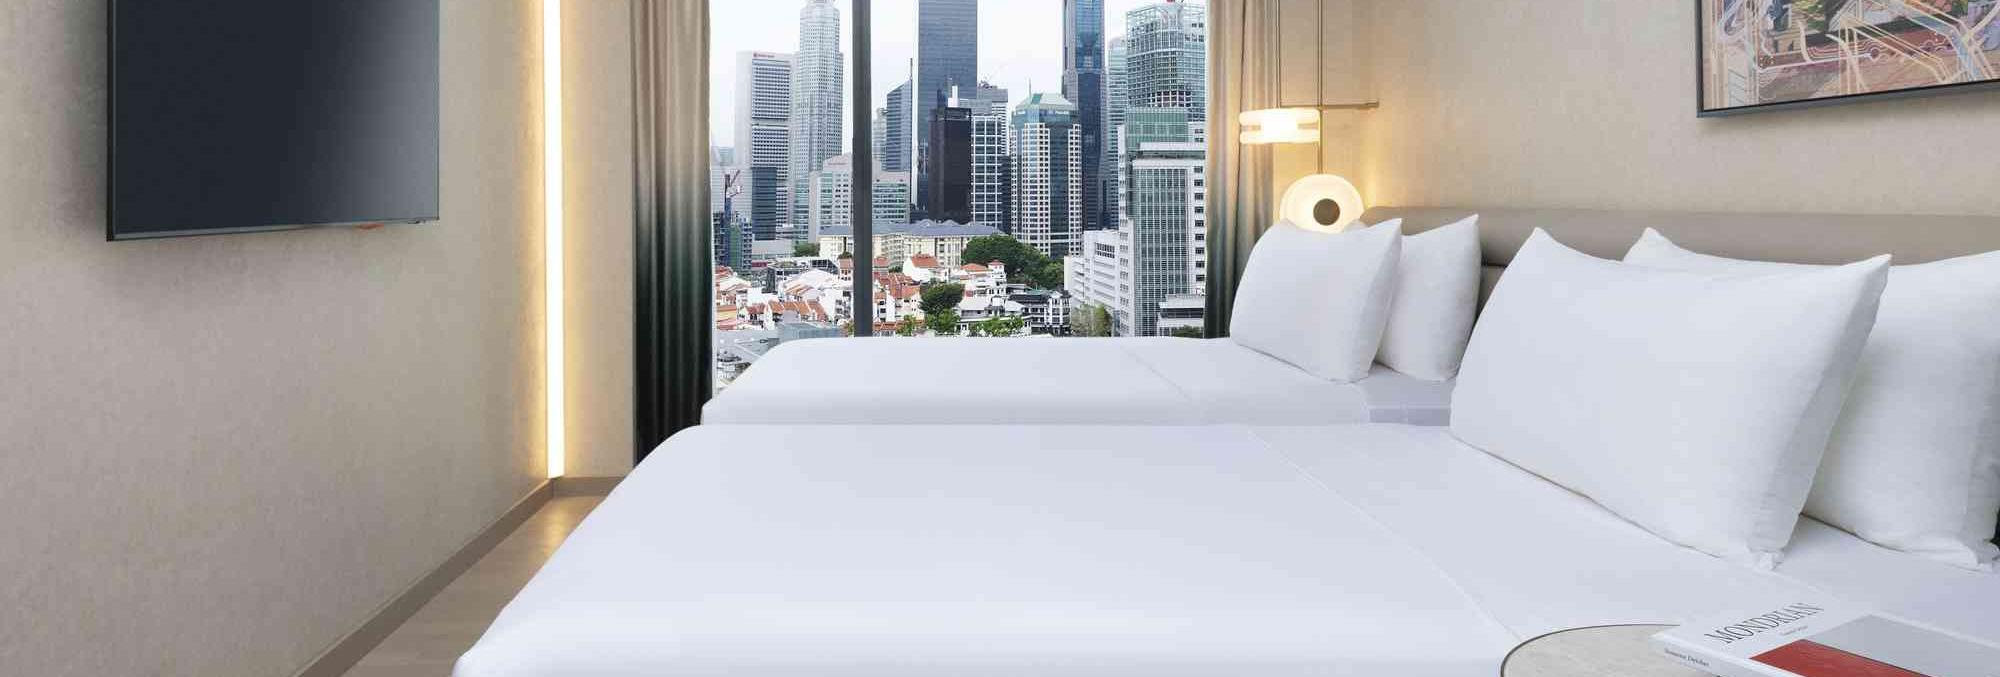 Twin beds Singapore Duxton - Duxton View room